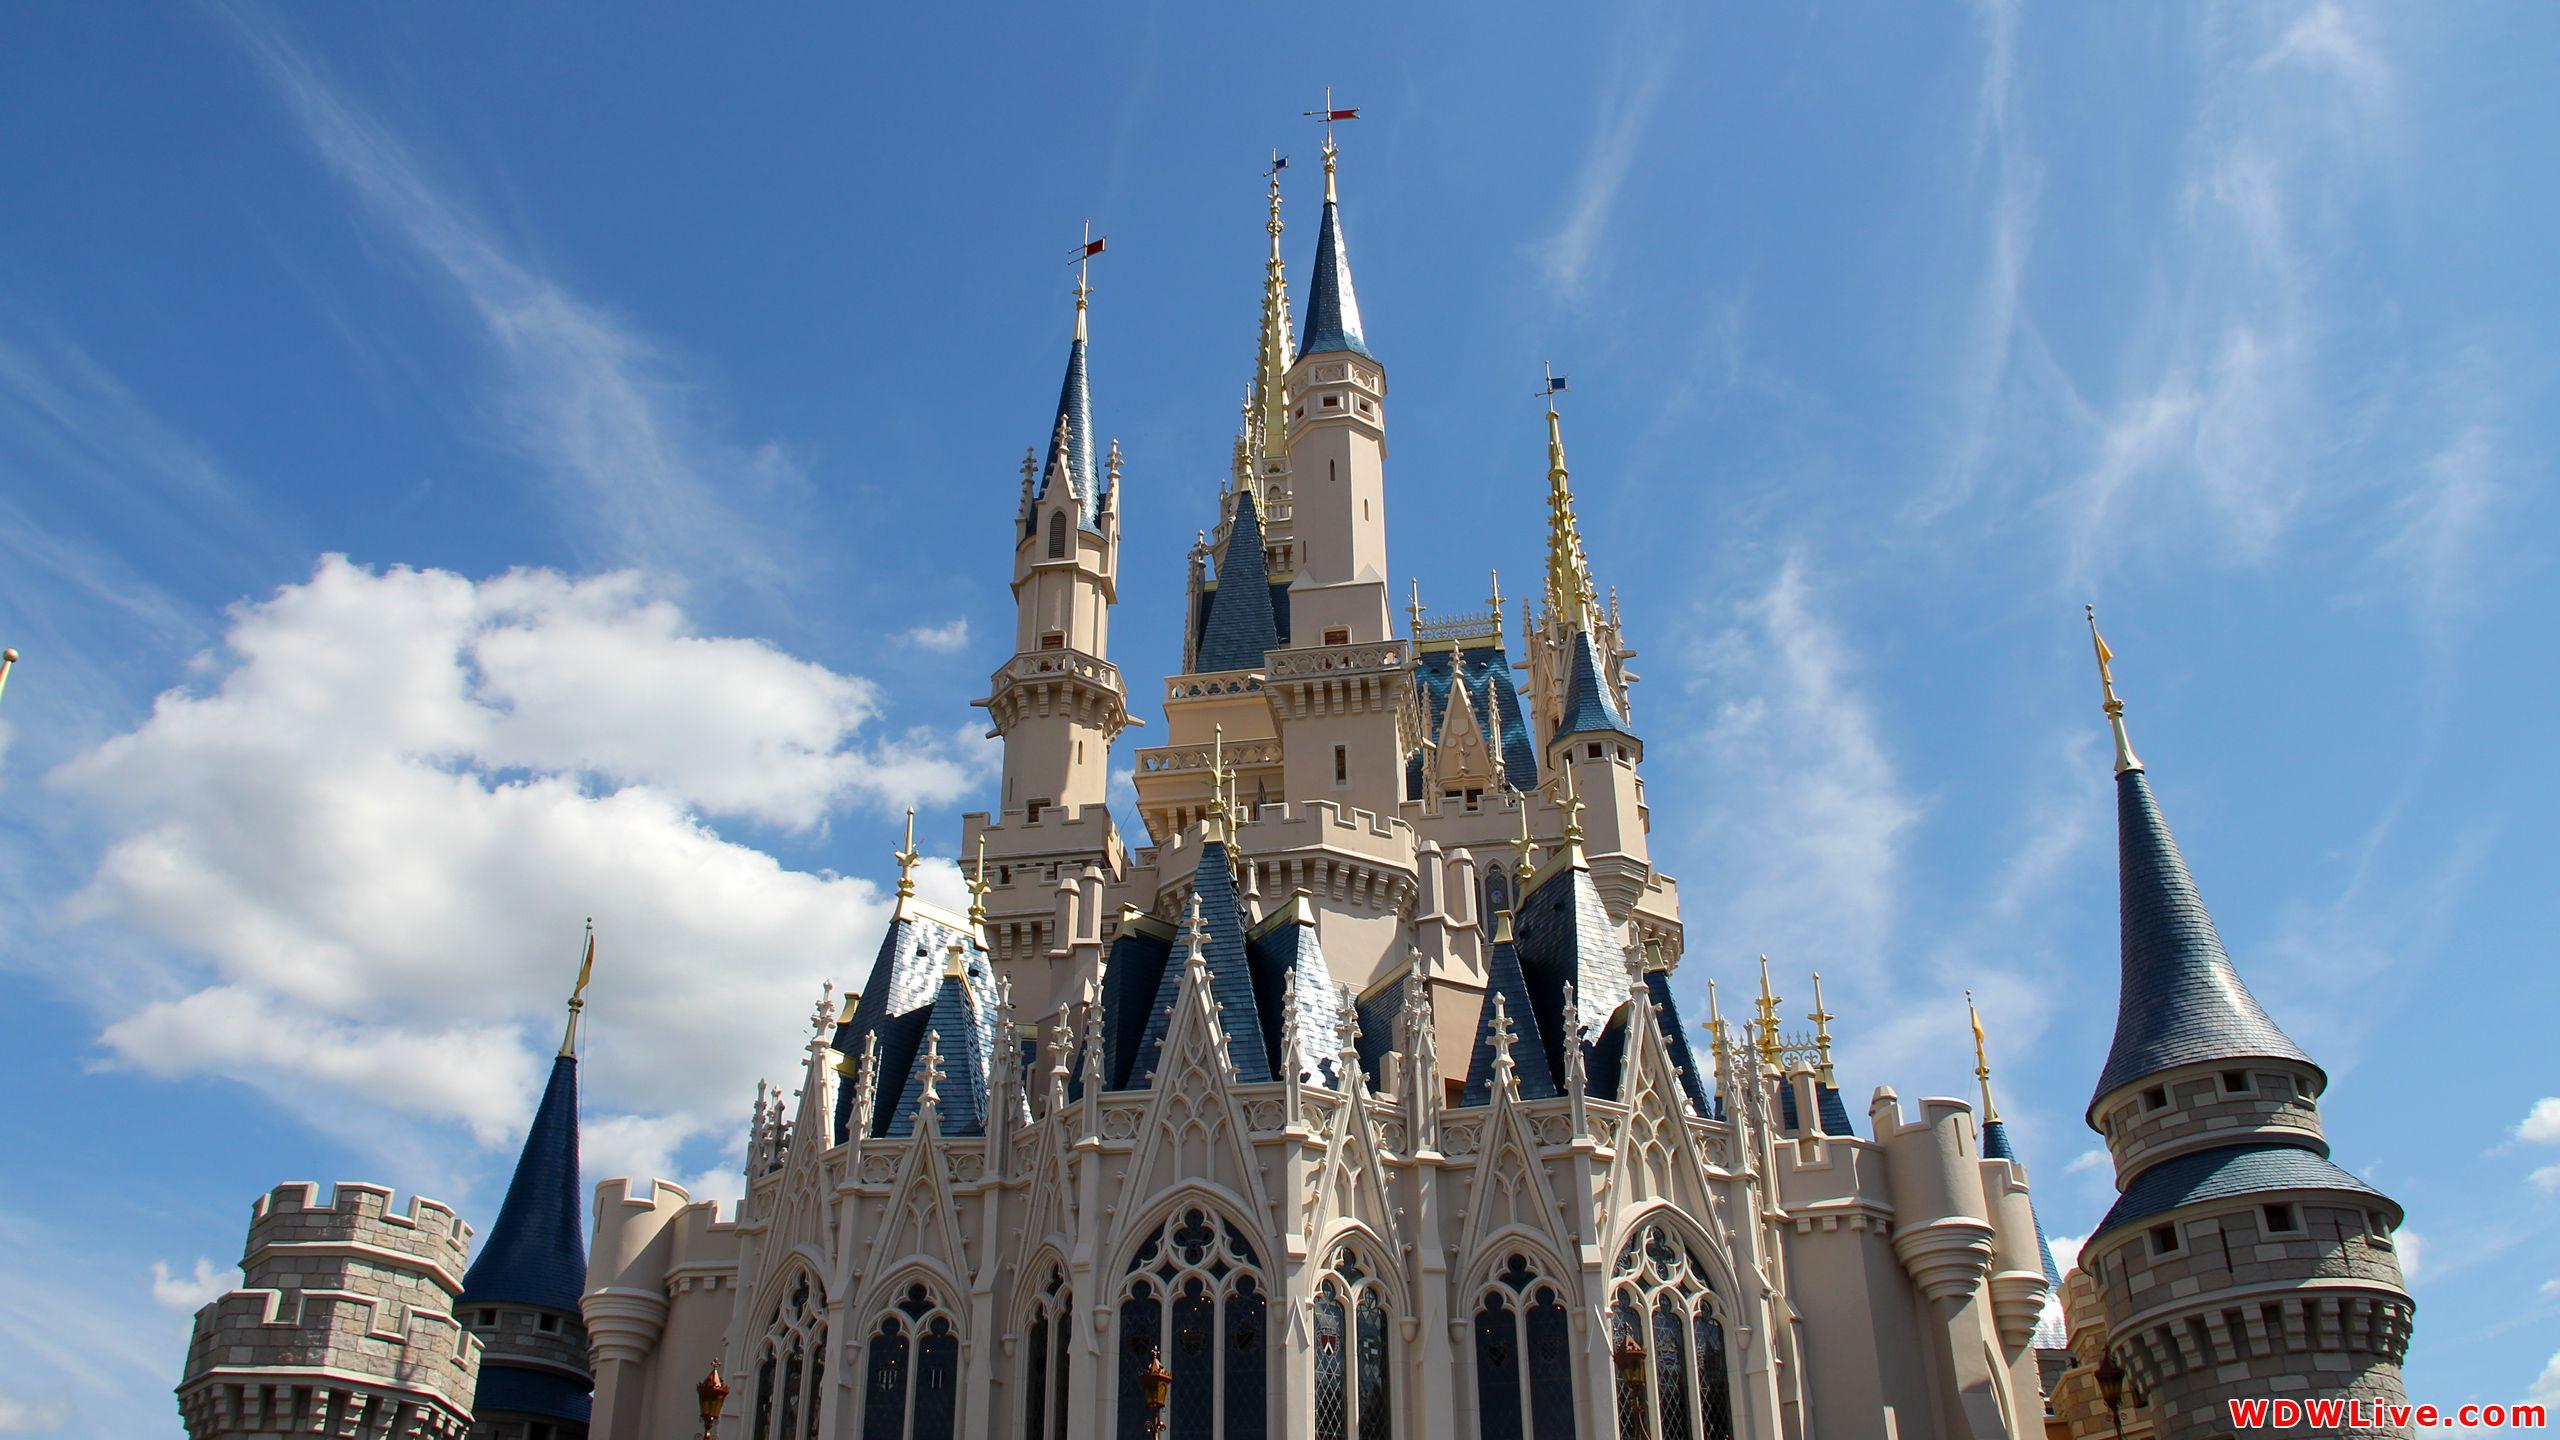 Cinderella Castle: The back of Cinderella Castle against a